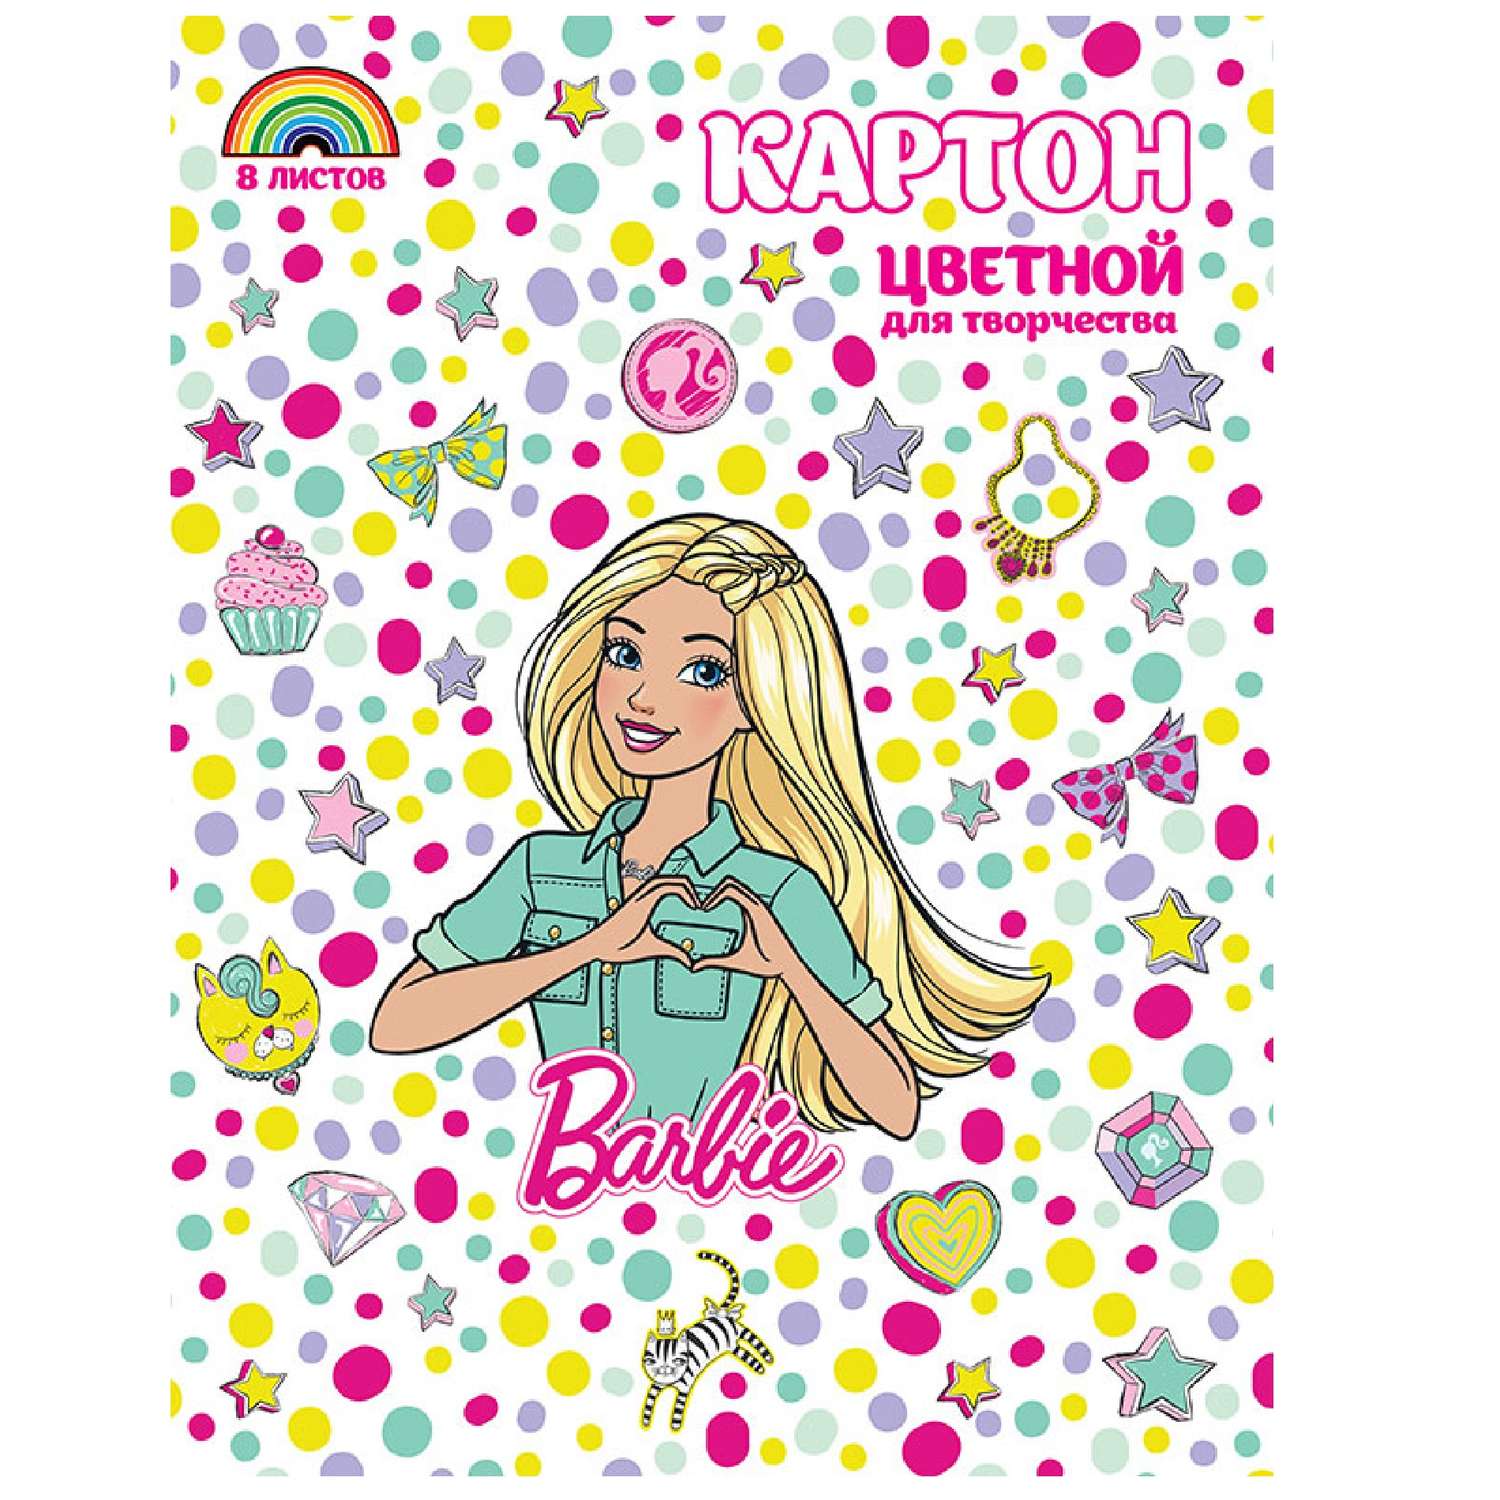 Картон цветной 8 листов PrioritY Barbie Аpt - фото 1